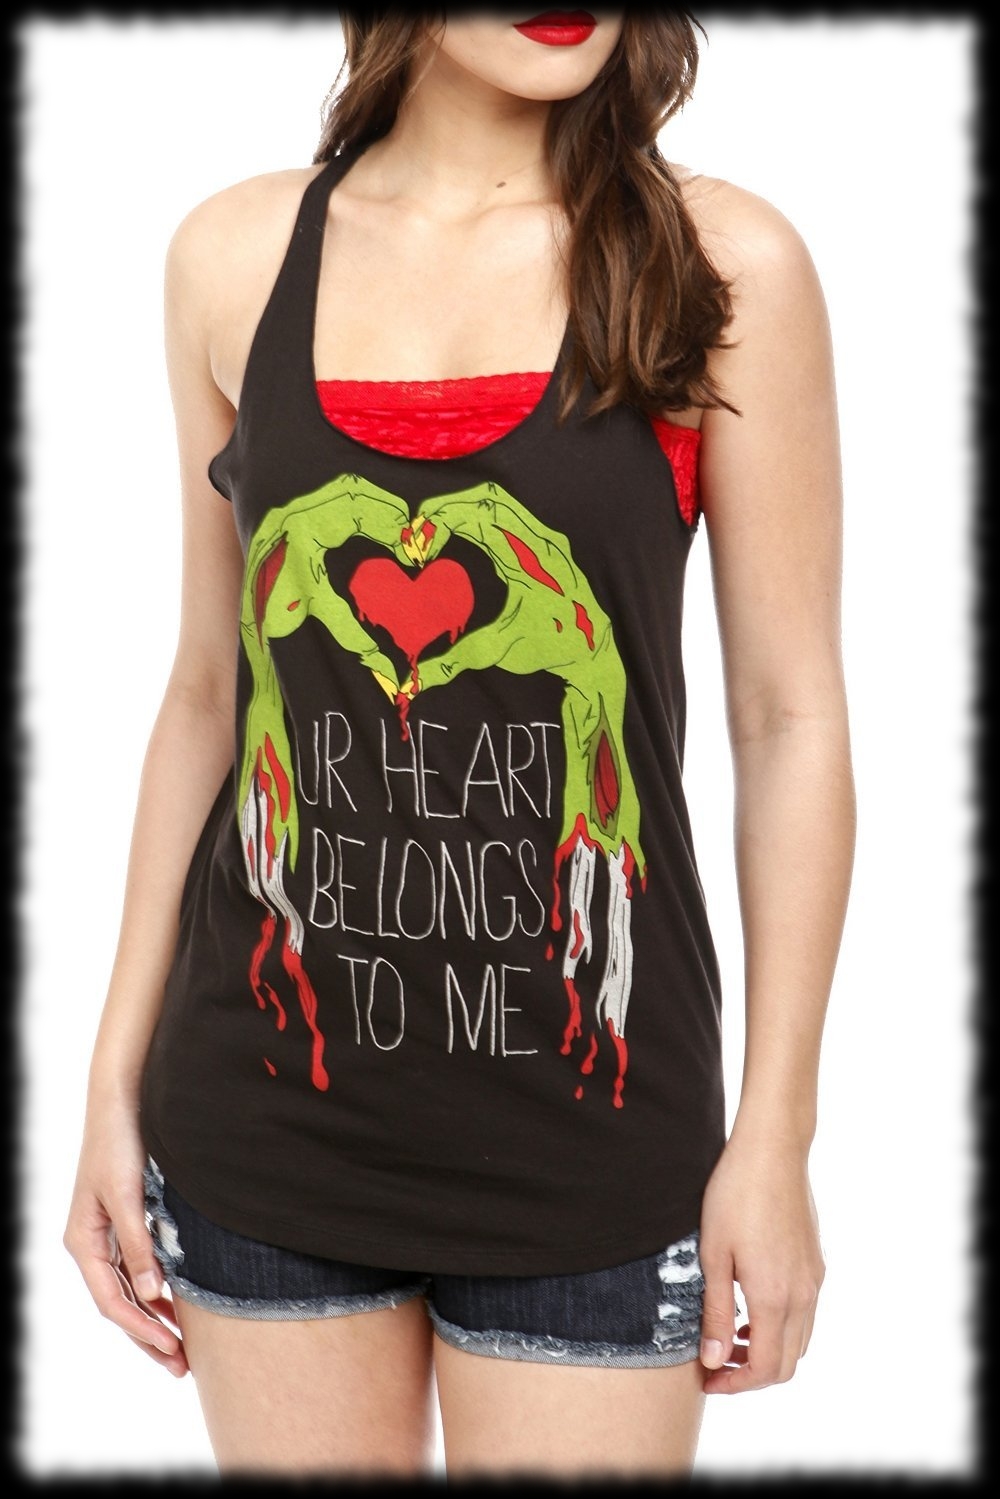 Ur Heart Belongs To Me Zombie Tank Top Costume Shirt